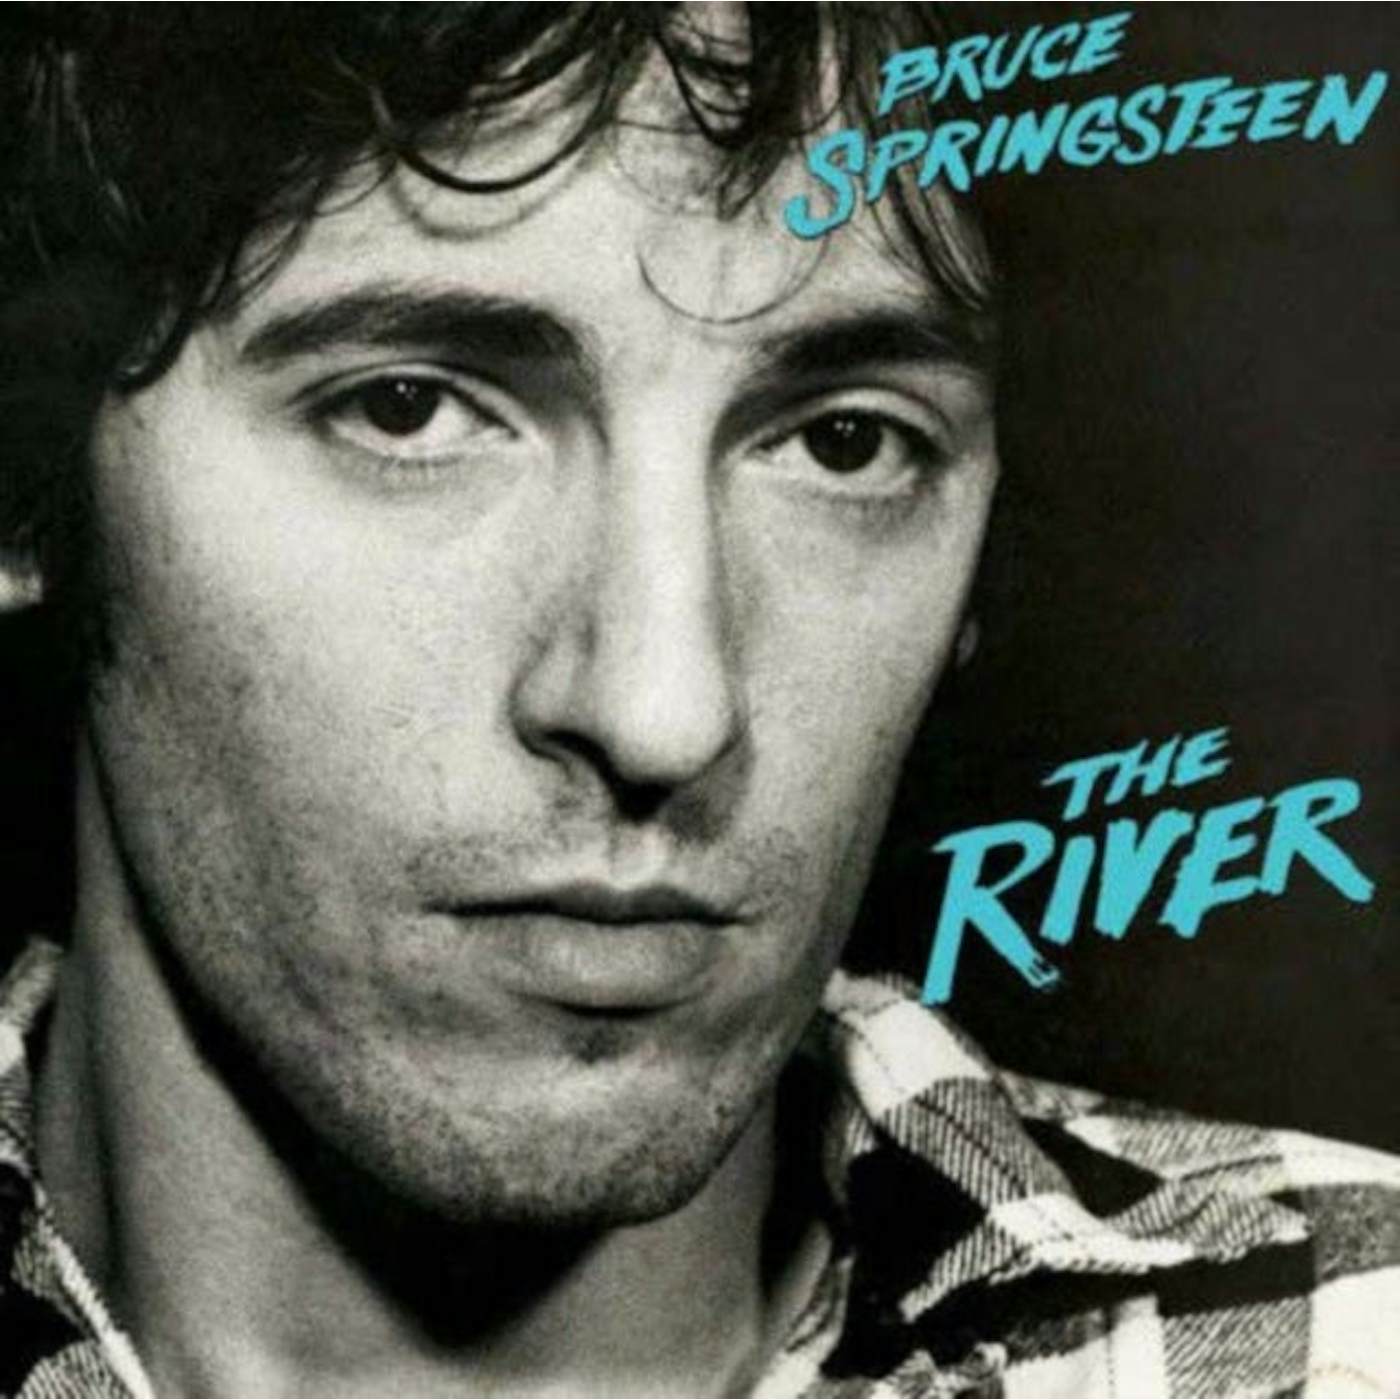 Bruce Springsteen LP Vinyl Record - The River